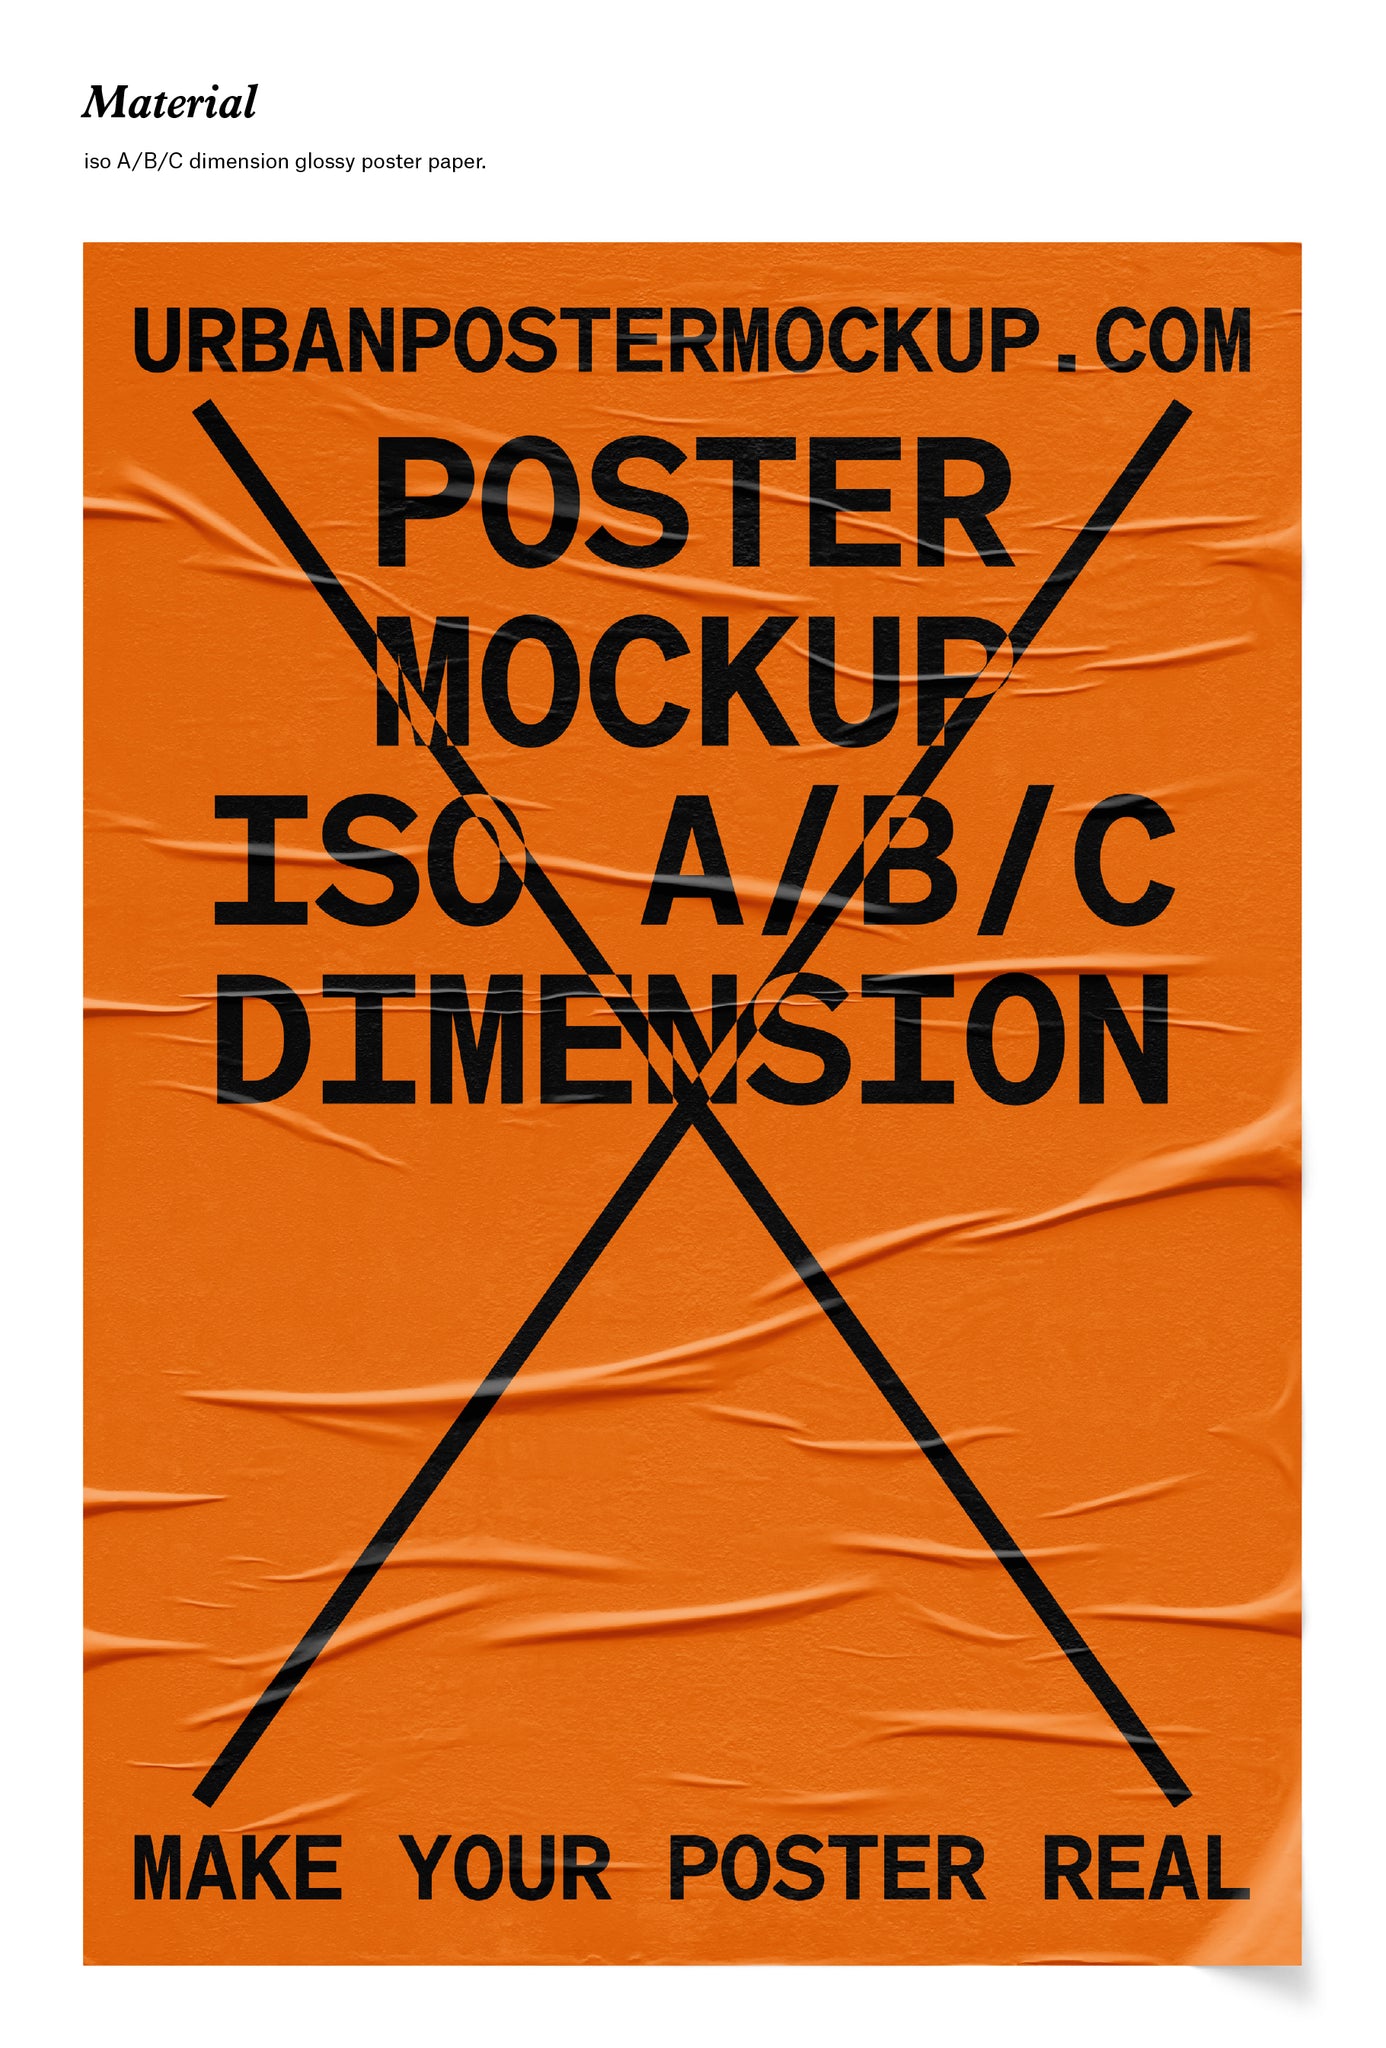 Glued Poster Paper Mockup Vol1